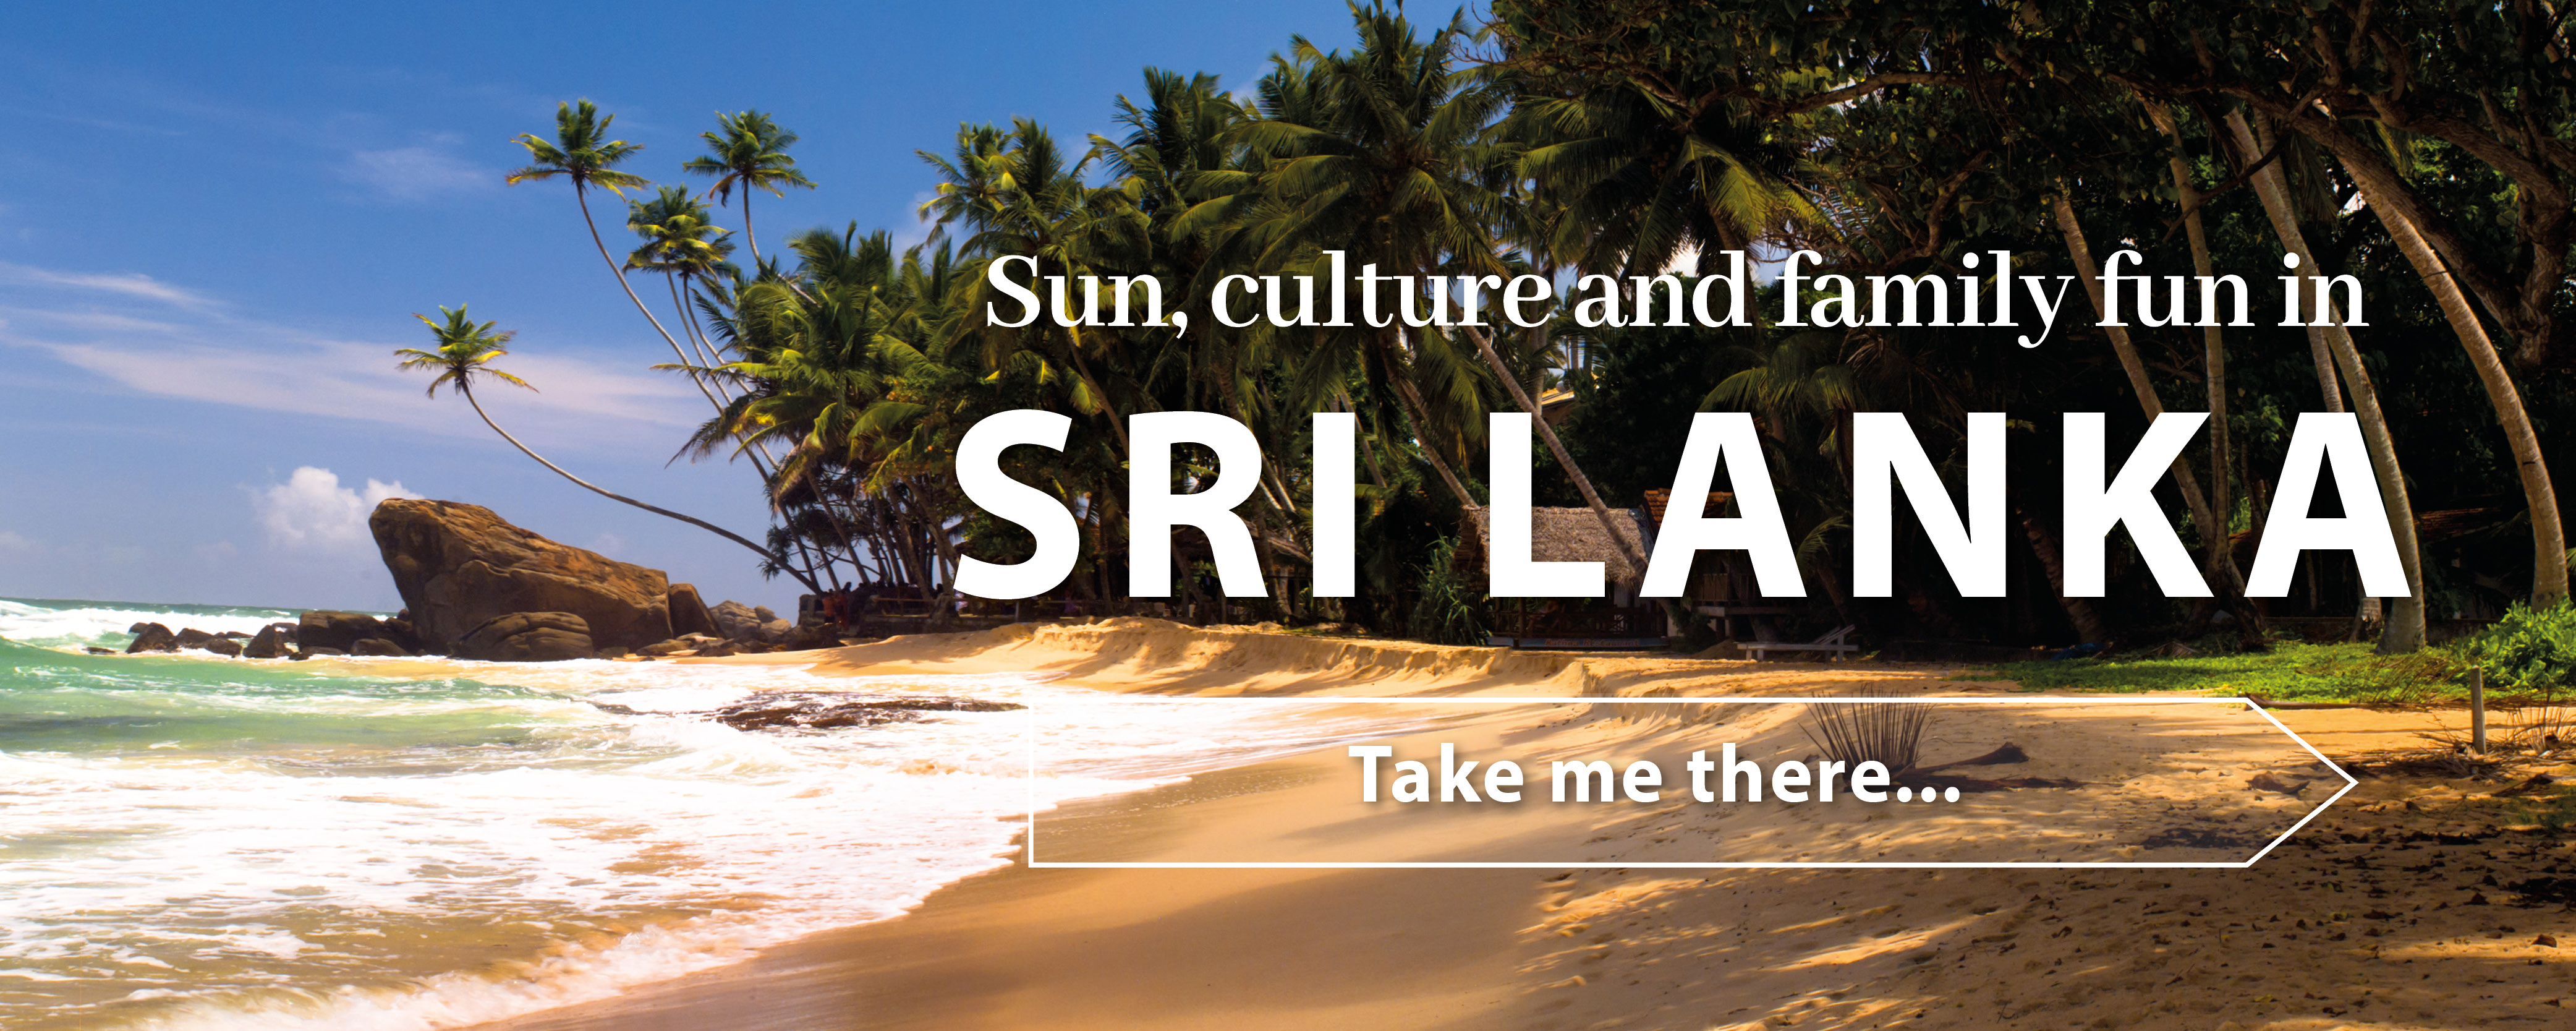 5 summer holiday ideas Sri Lanka